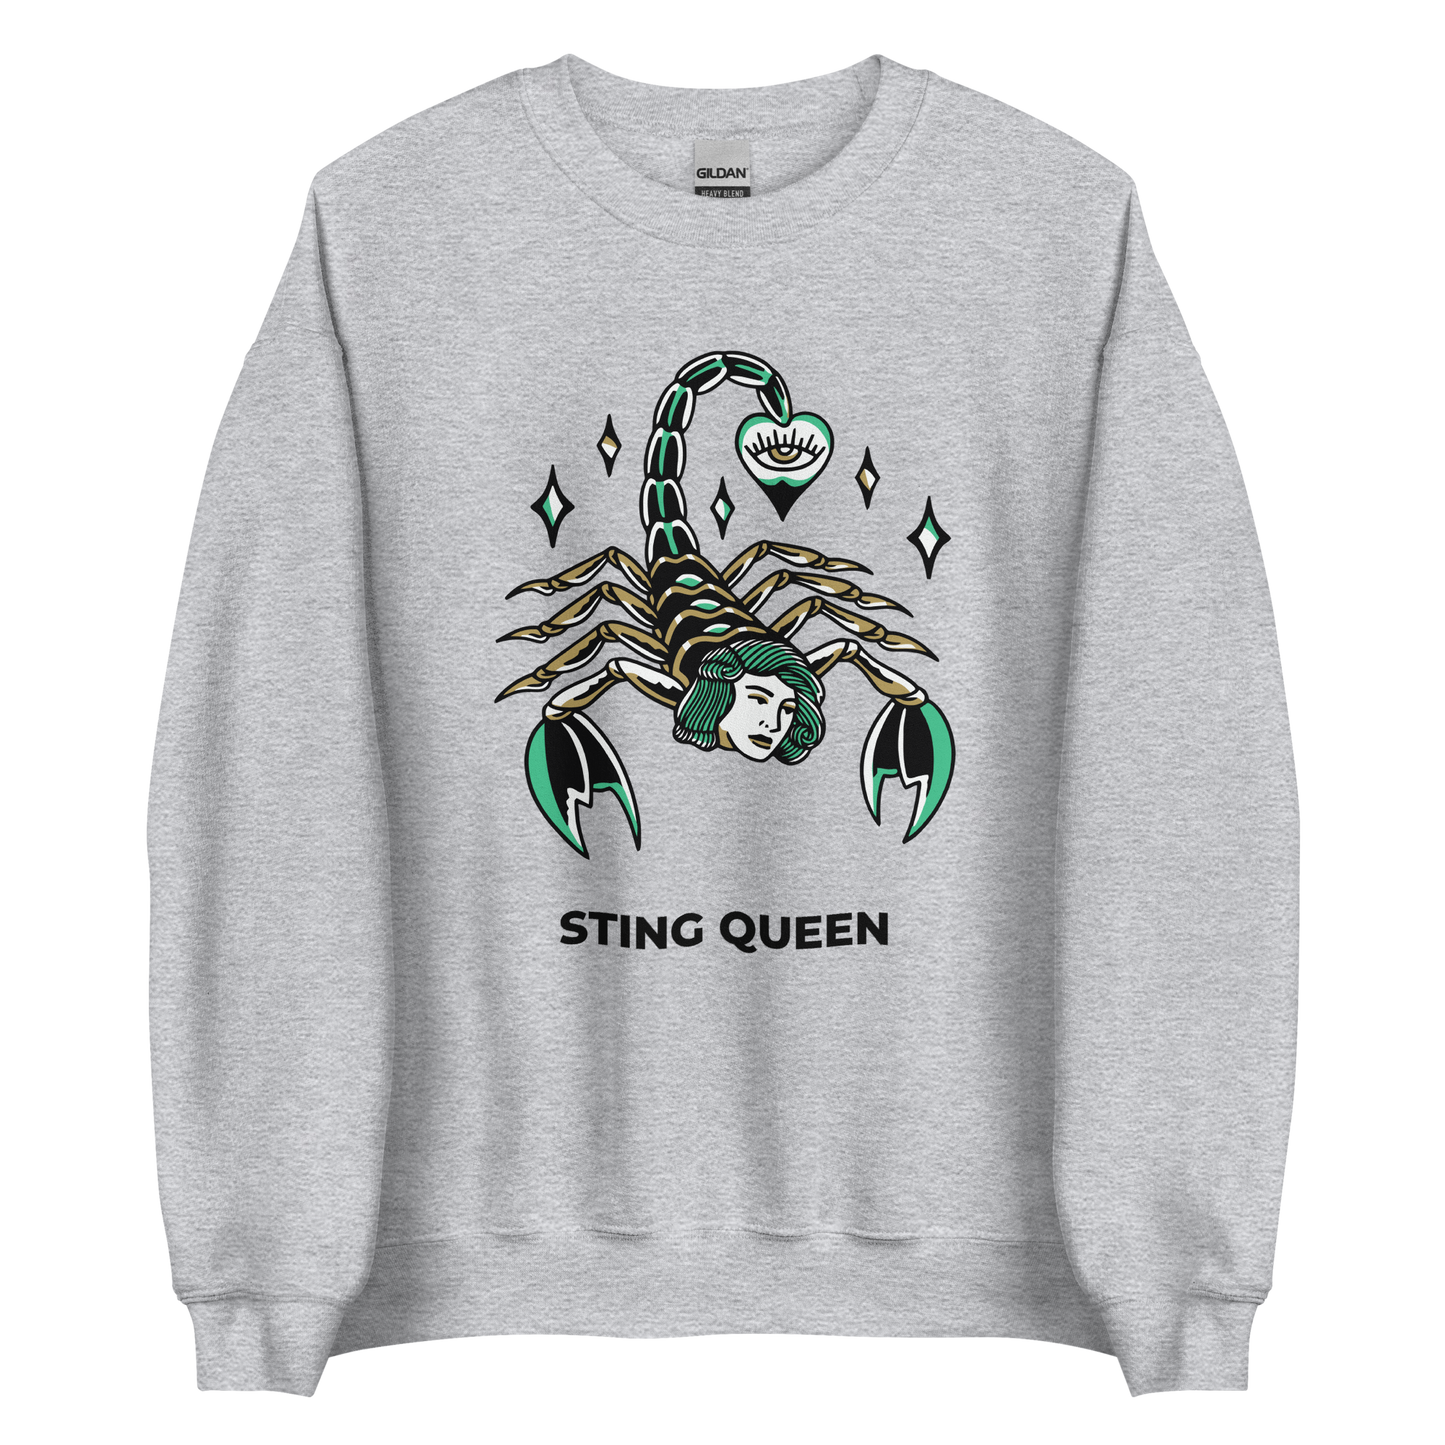 Sport Grey Scorpion Sweatshirt featuring the Sting Queen graphic on the chest - Cool Graphic Scorpion Sweatshirts - Boozy Fox